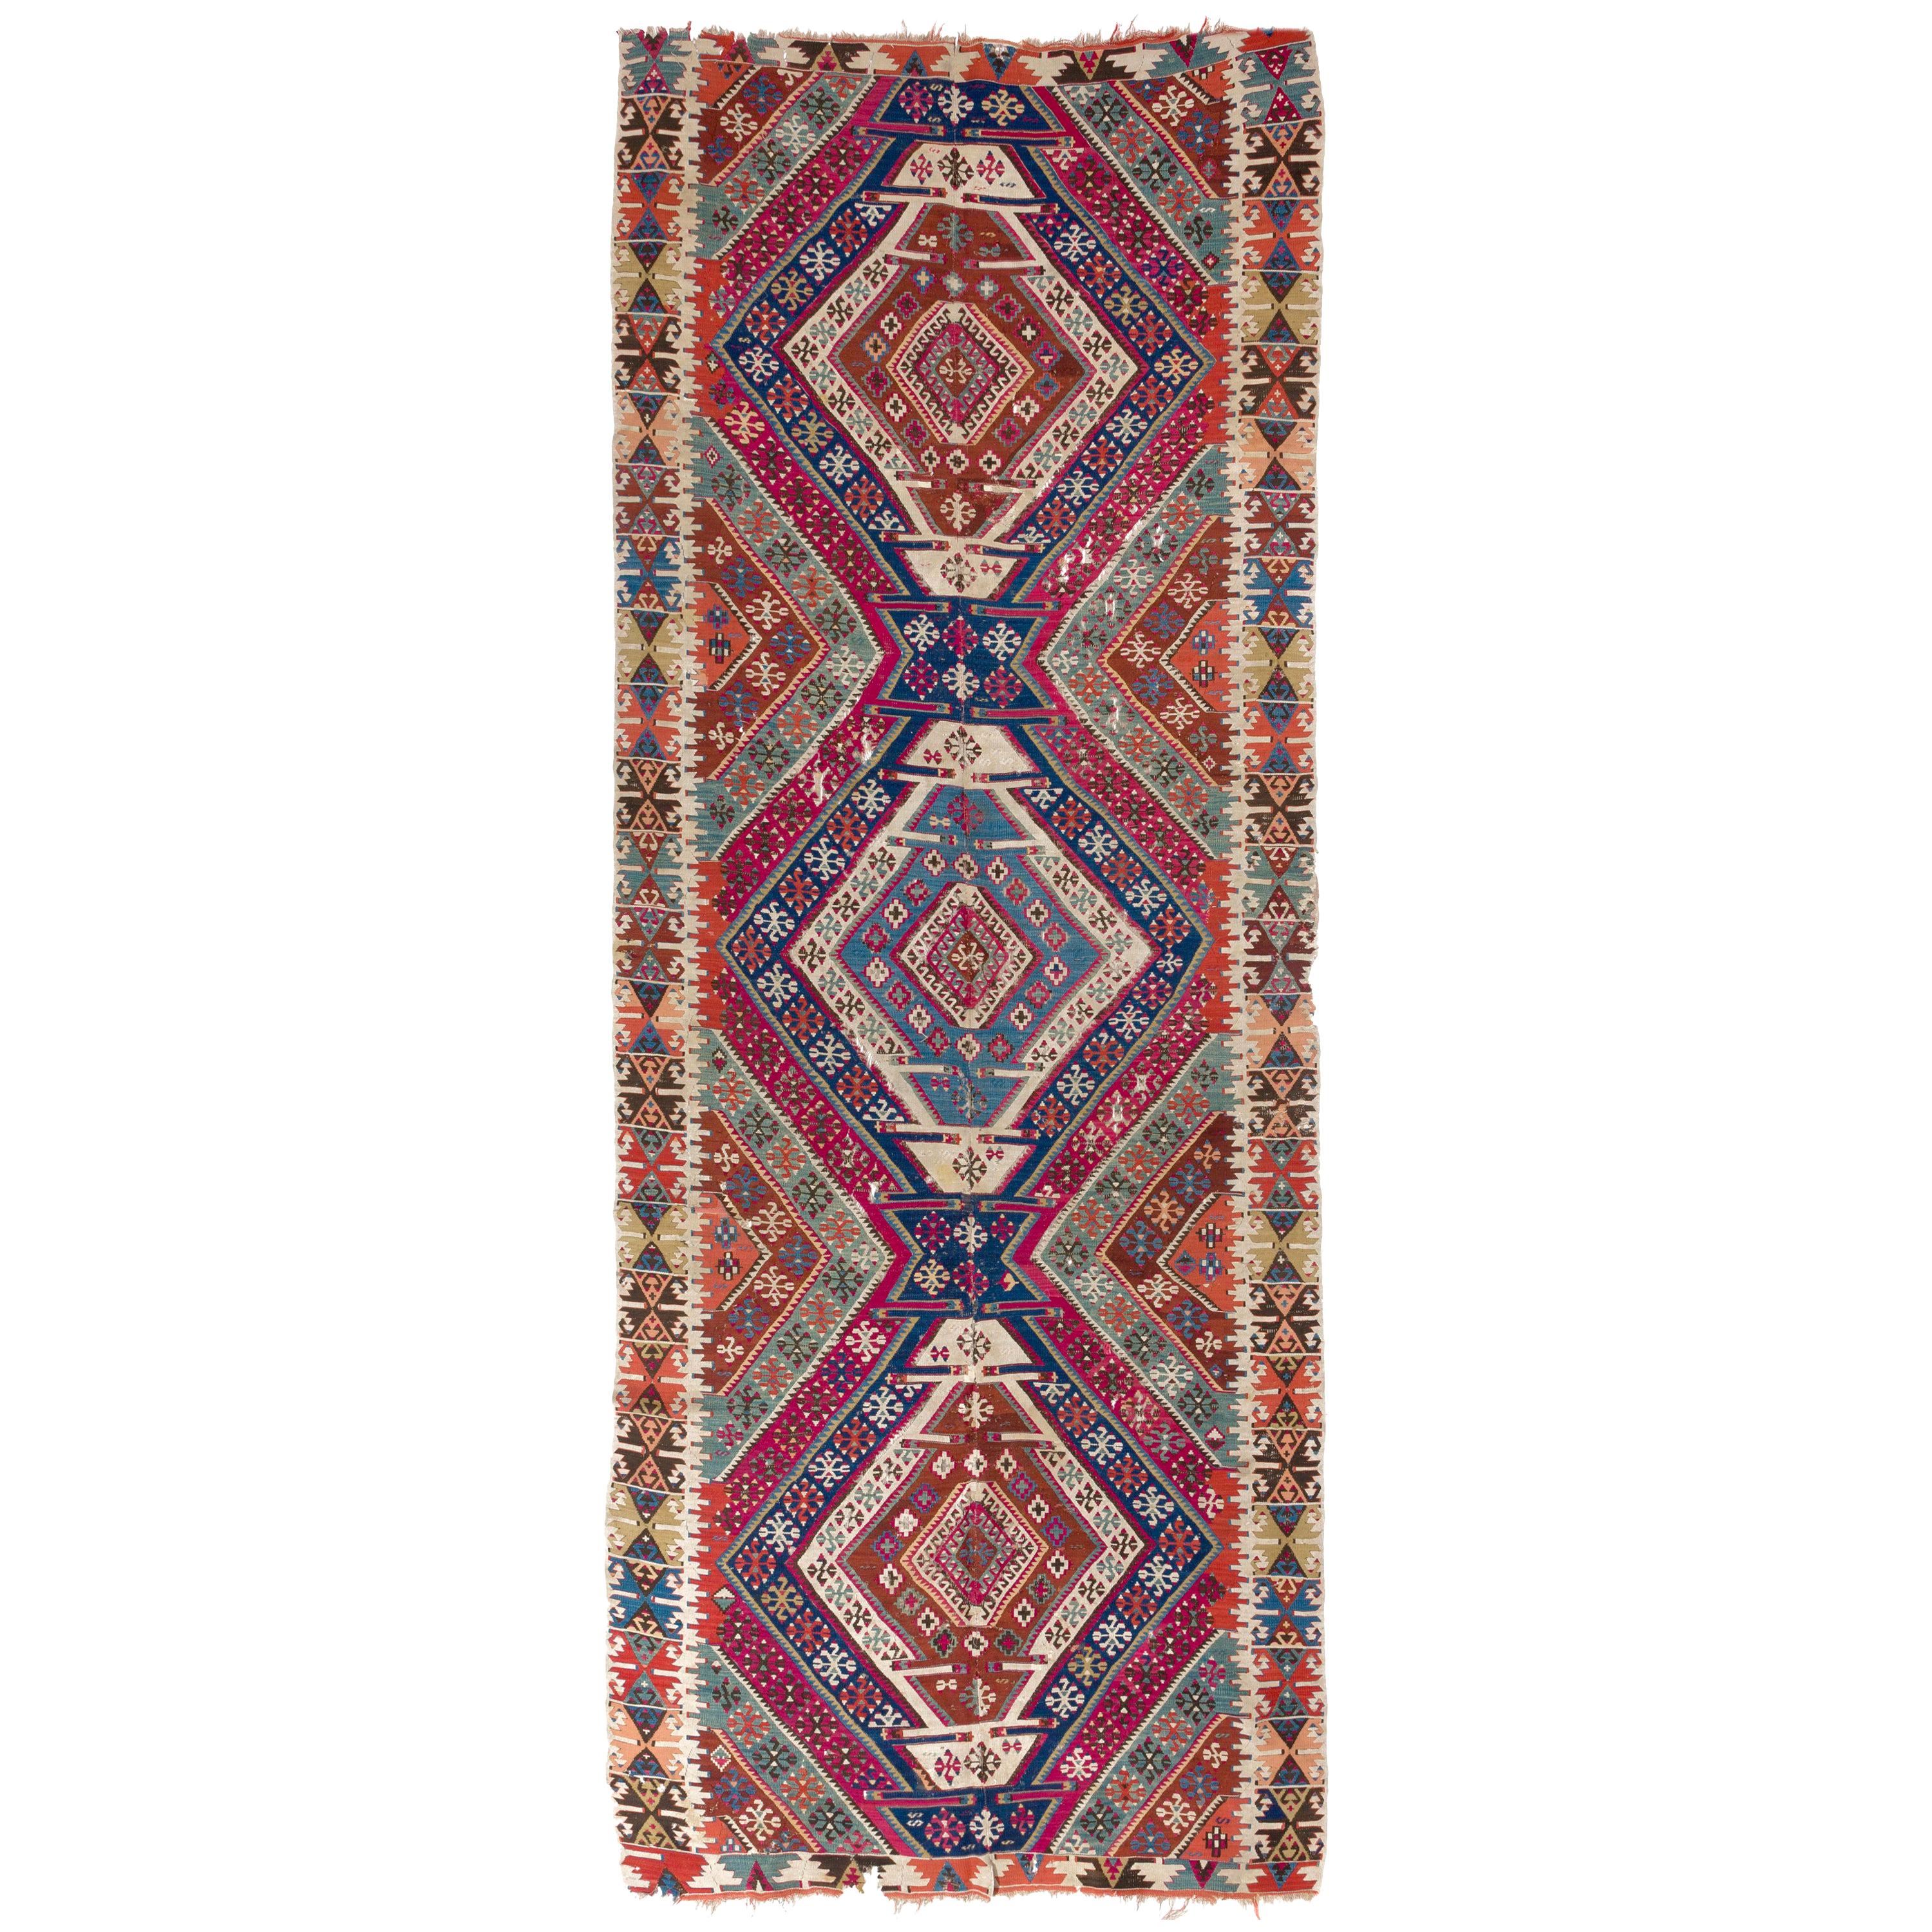 5x13.5 Ft Rare Antique Handmade Anatolian Flat-Weave Kilim Rug, Ca 1875